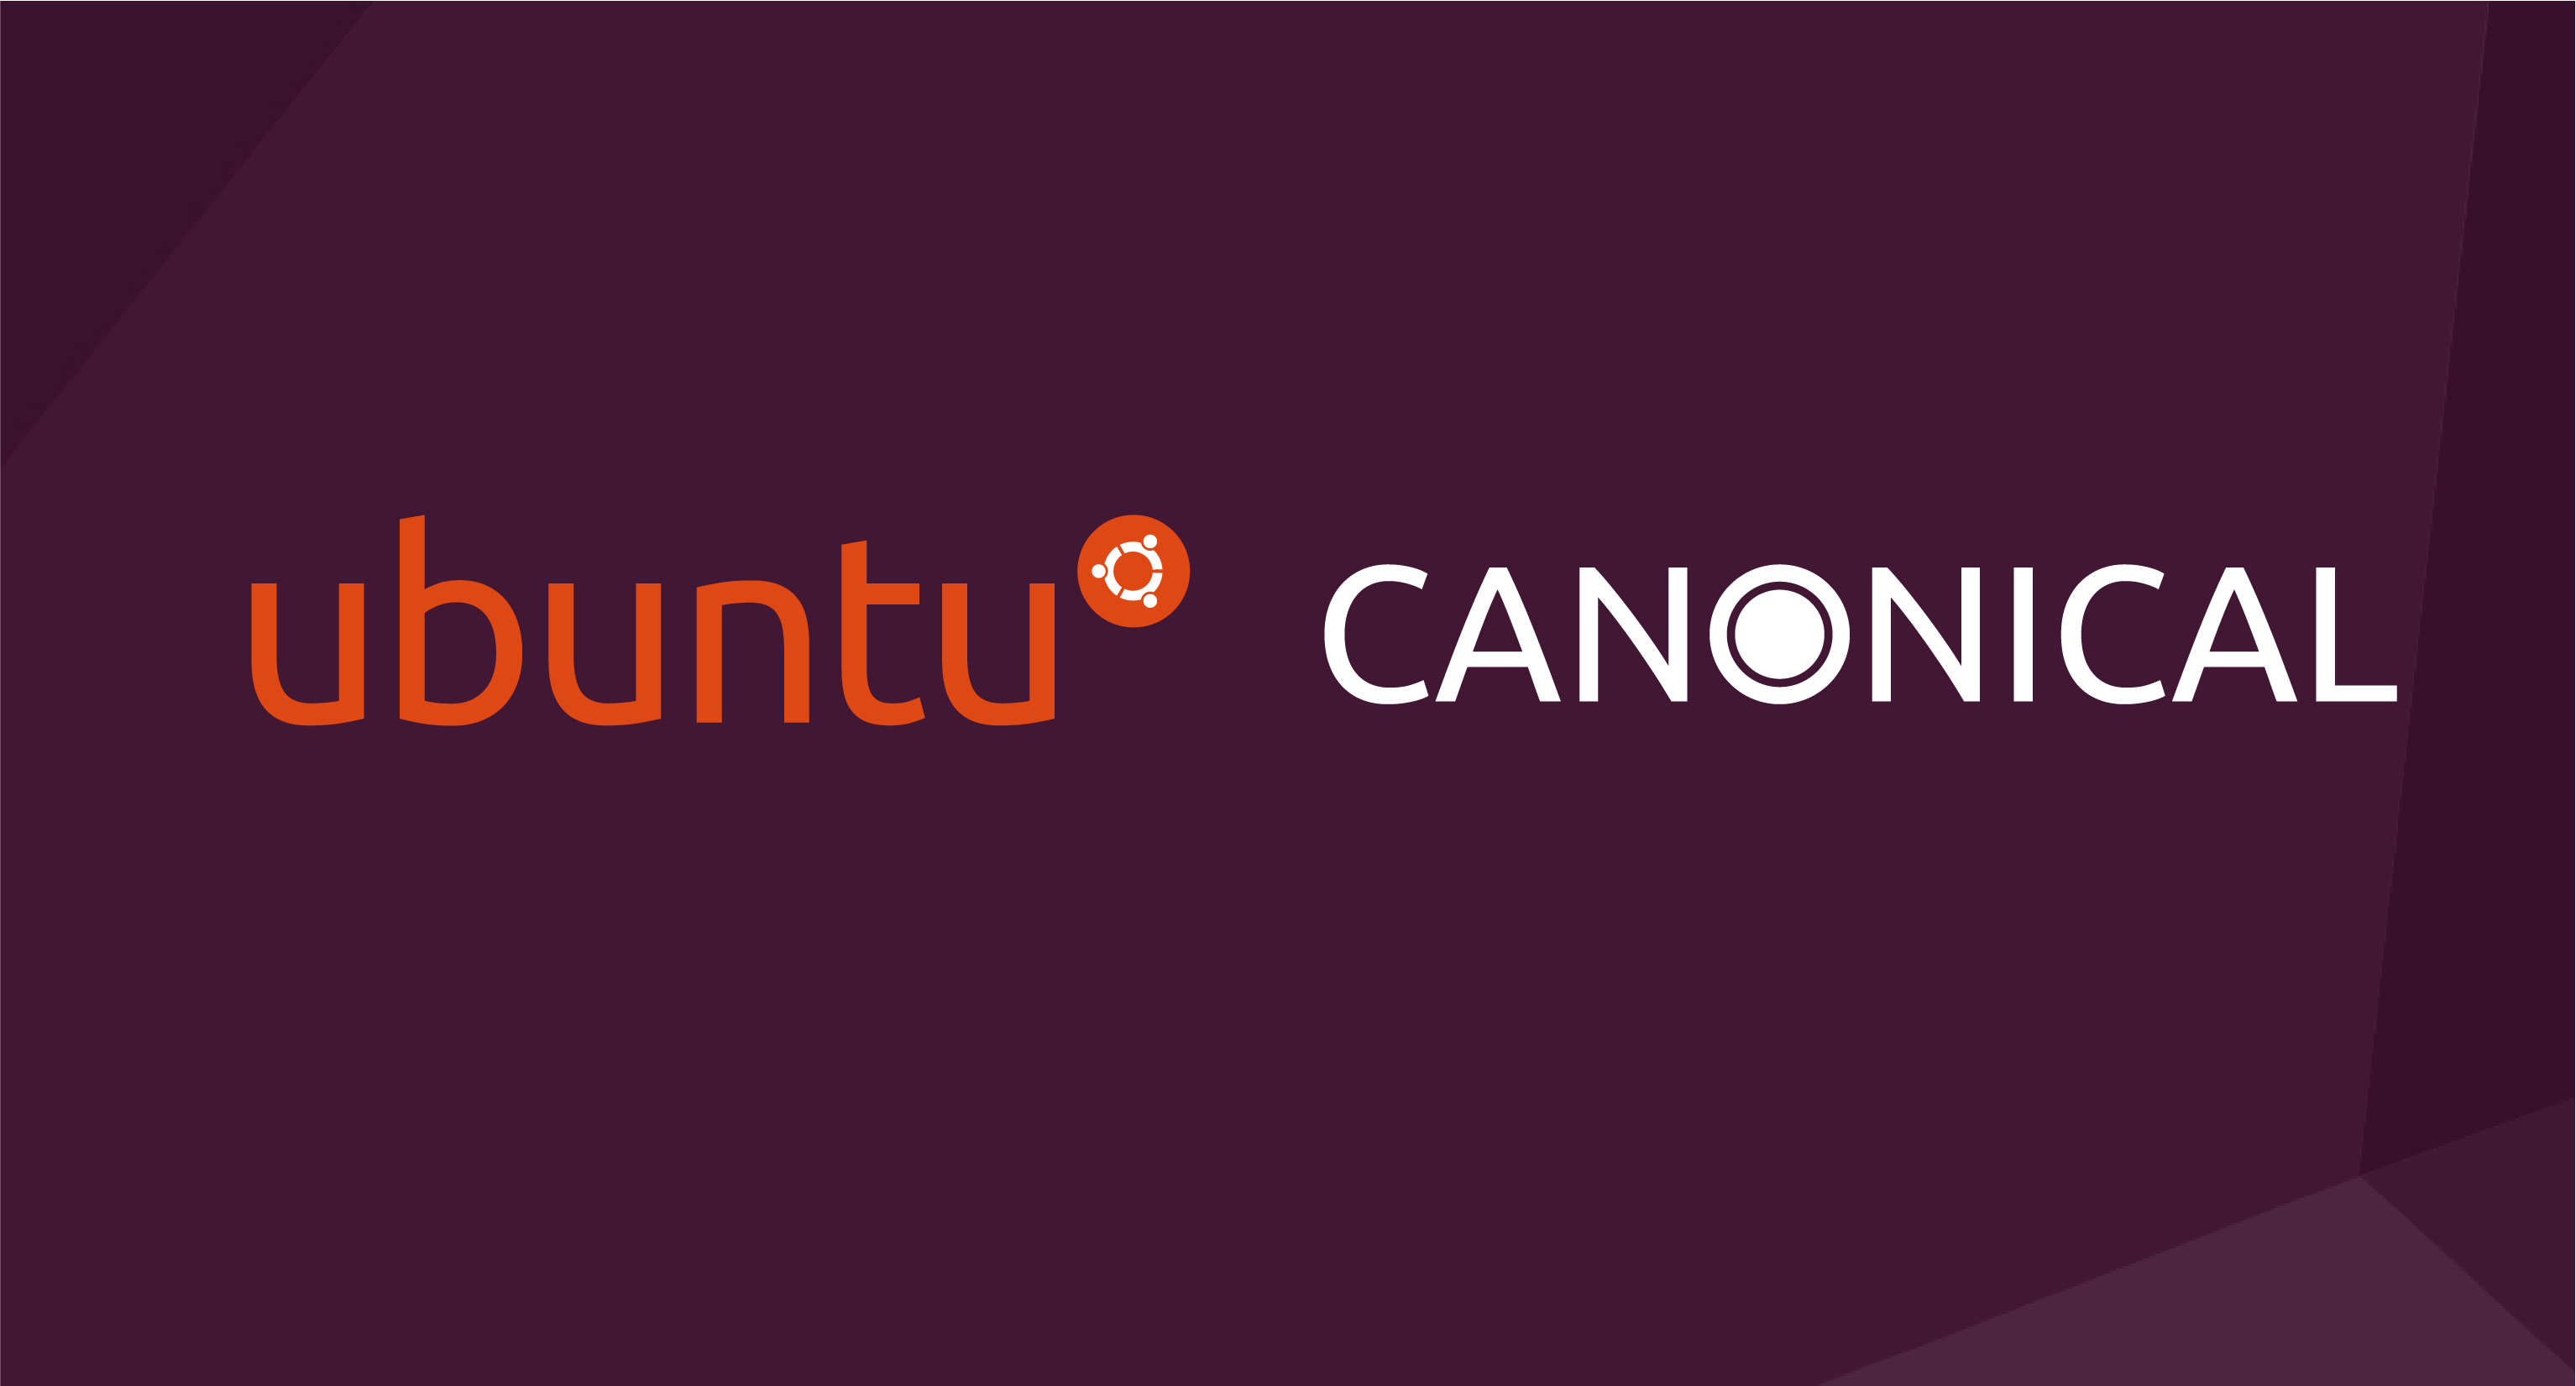 Canonical Ubuntu at mobile world congress